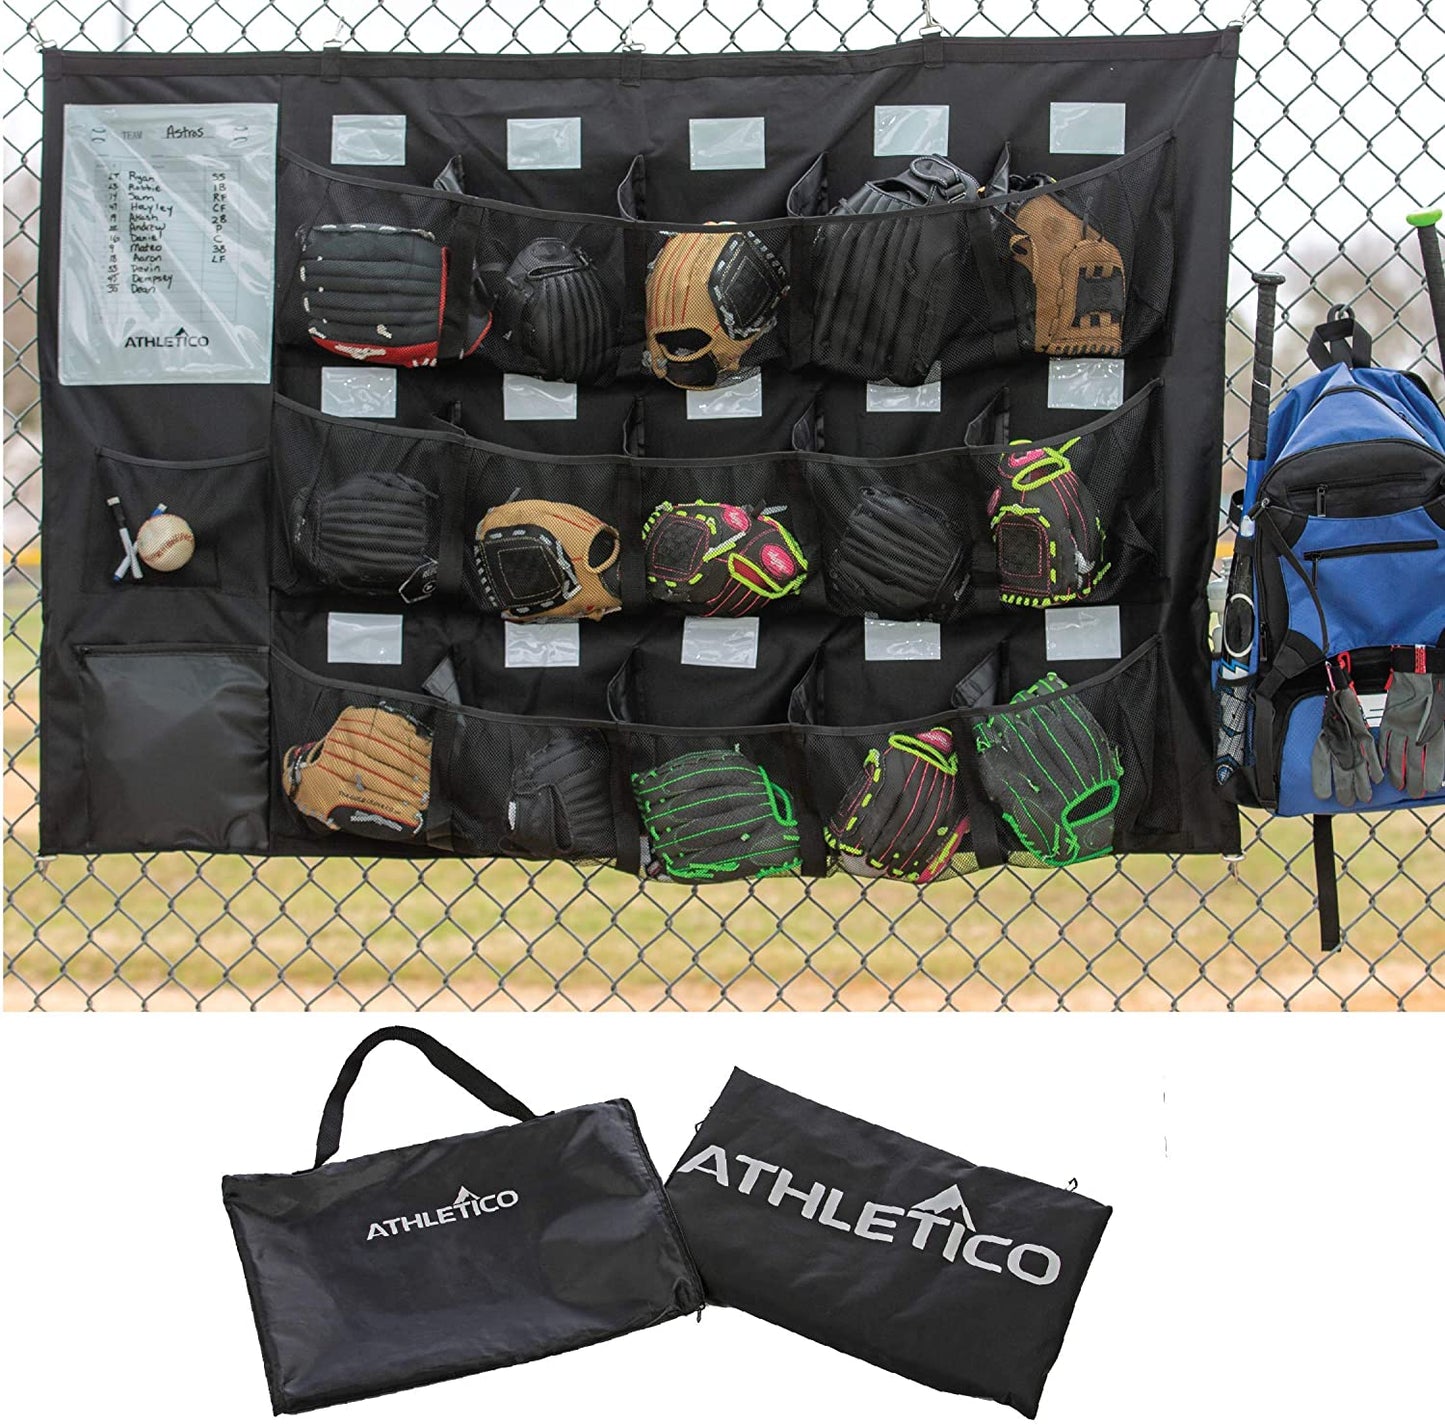 Athletico 15 Player Dugout Organizer - Hanging Baseball Helmet Bag to Organize Baseball Equipment Including Gloves, Helmets, Batting Gloves, Balls, & More - (For 6 piece(s))